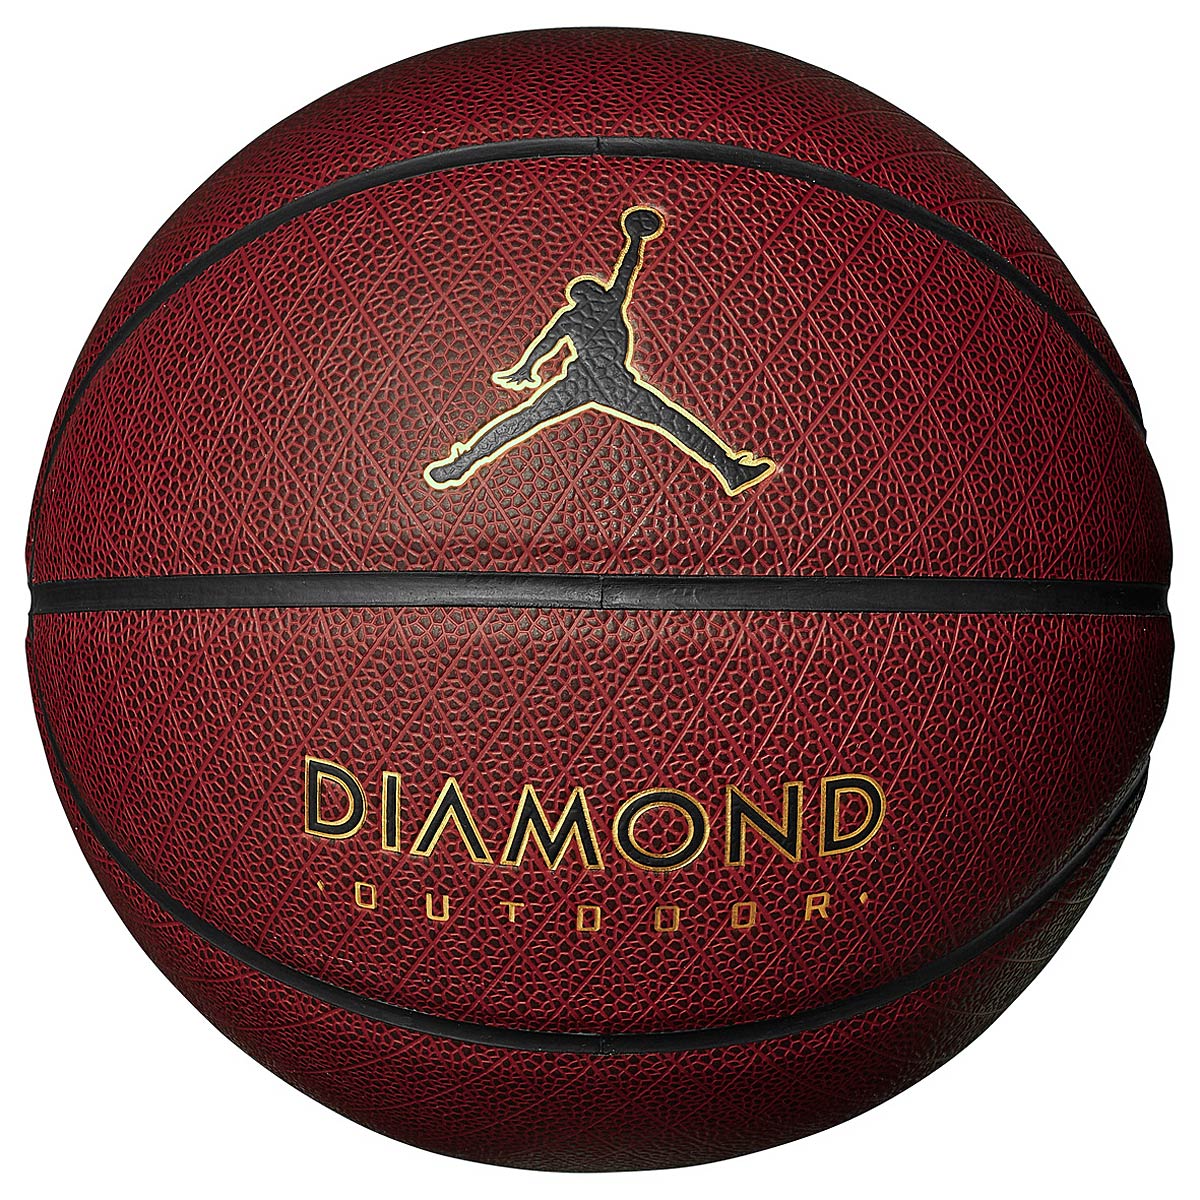 Nike Diamond Outdoor Basketball, Amber/Black/Metallic Gold/Black